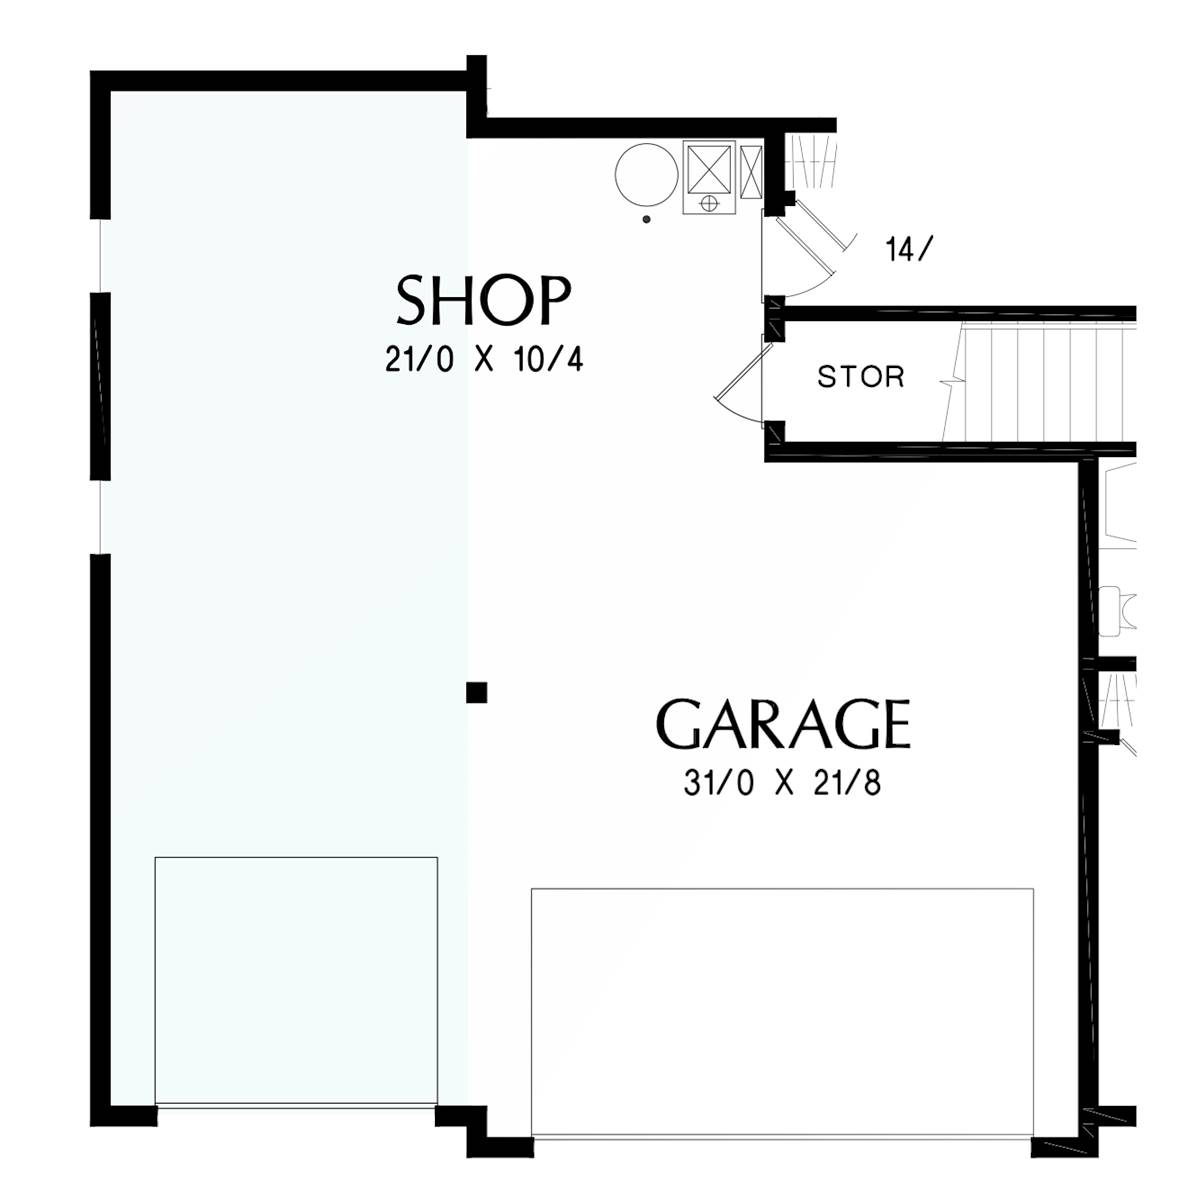 3rd Garage Bay Option